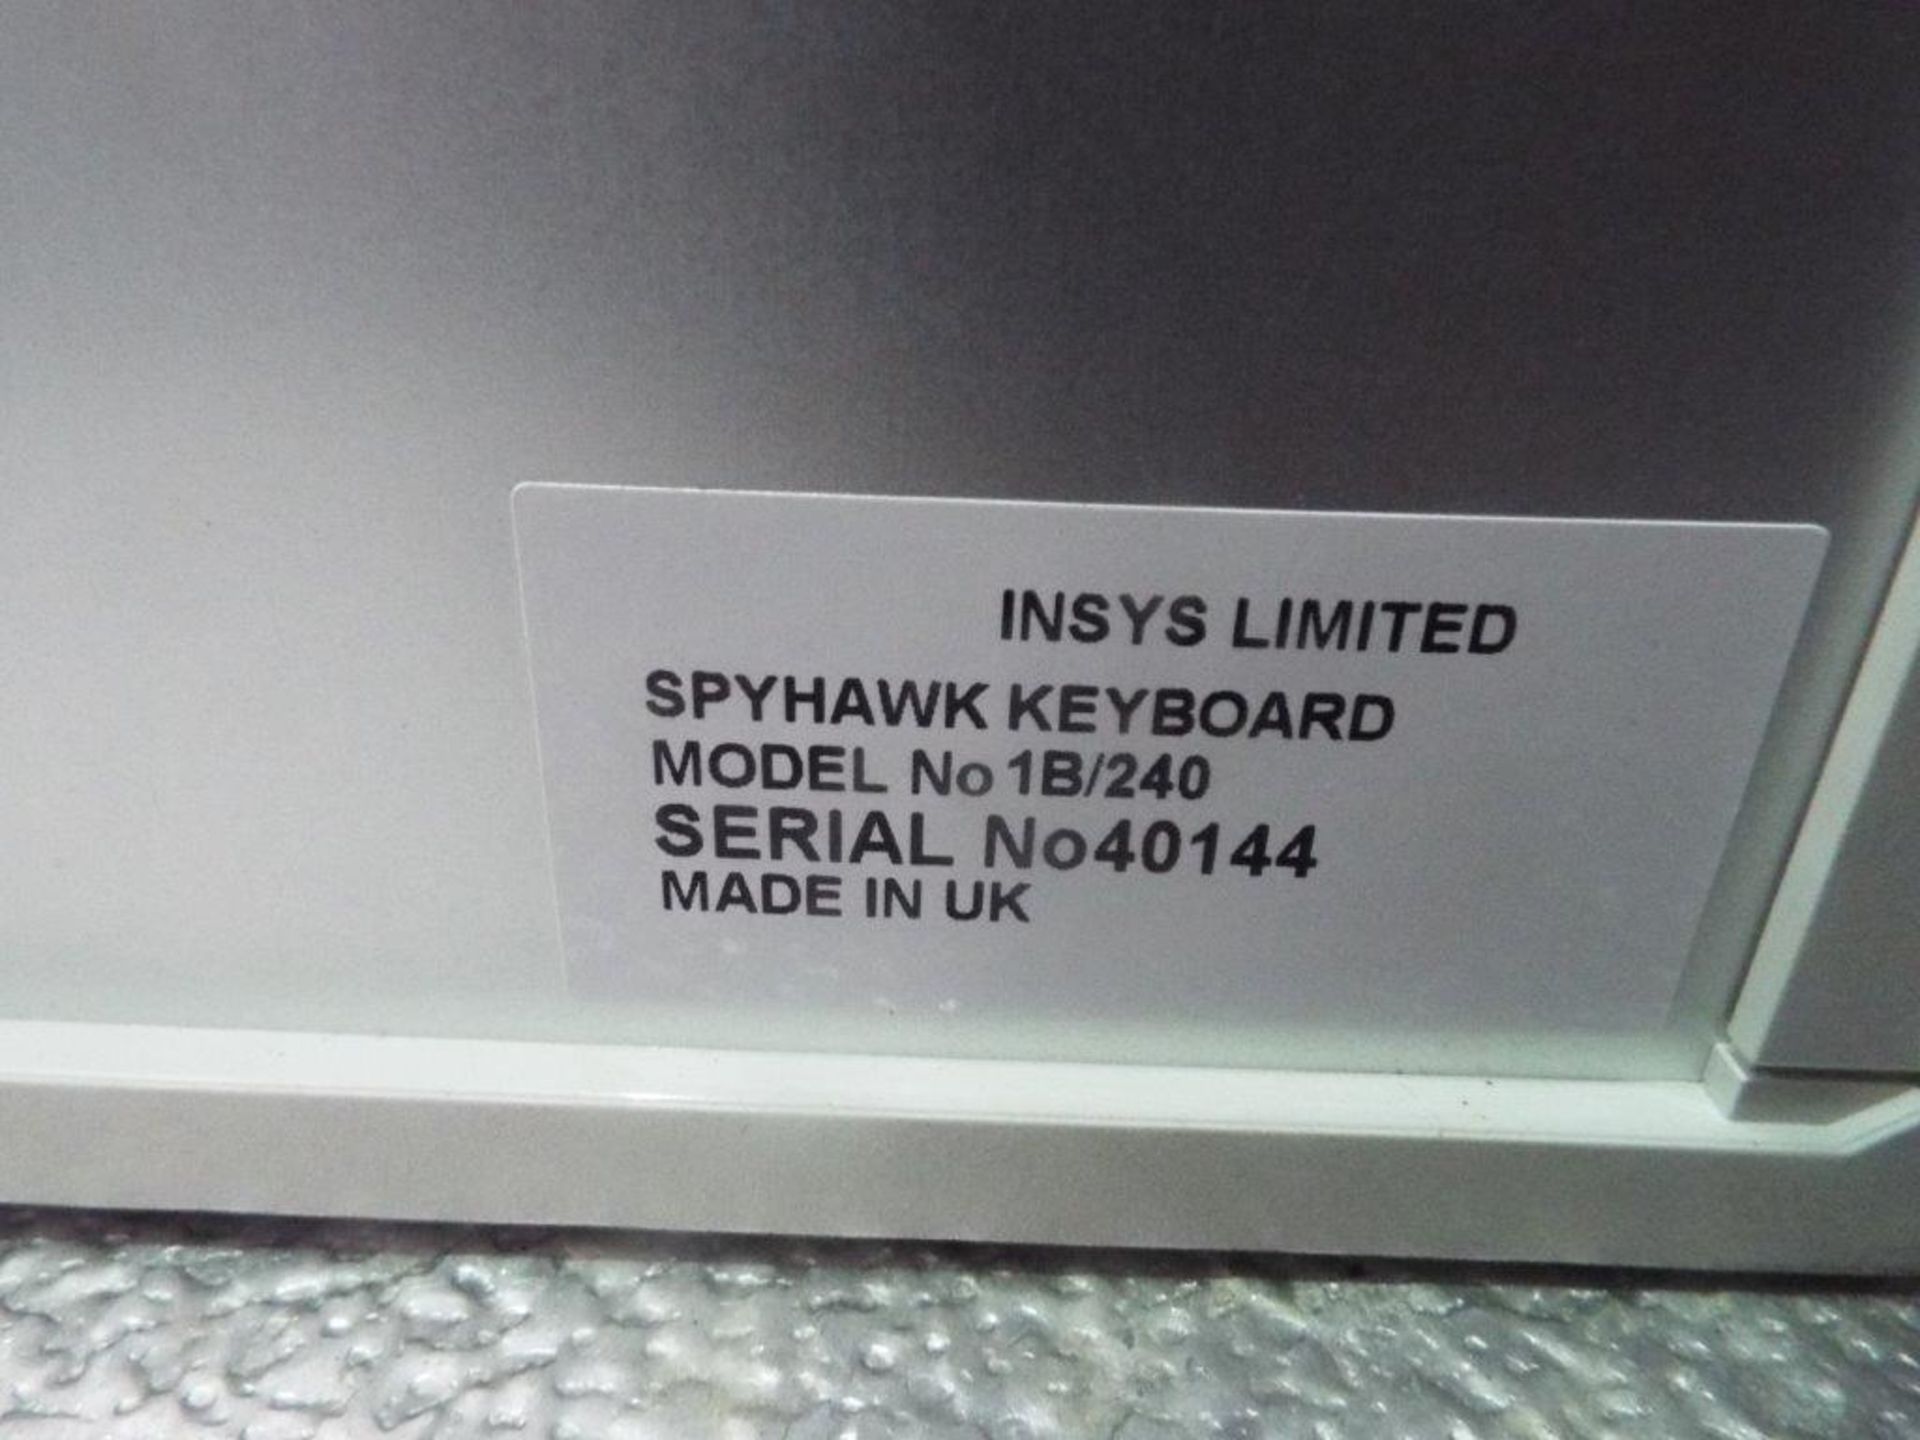 Insys Spyhawk Camera Head with Processor, Keyboard etc - Image 7 of 14